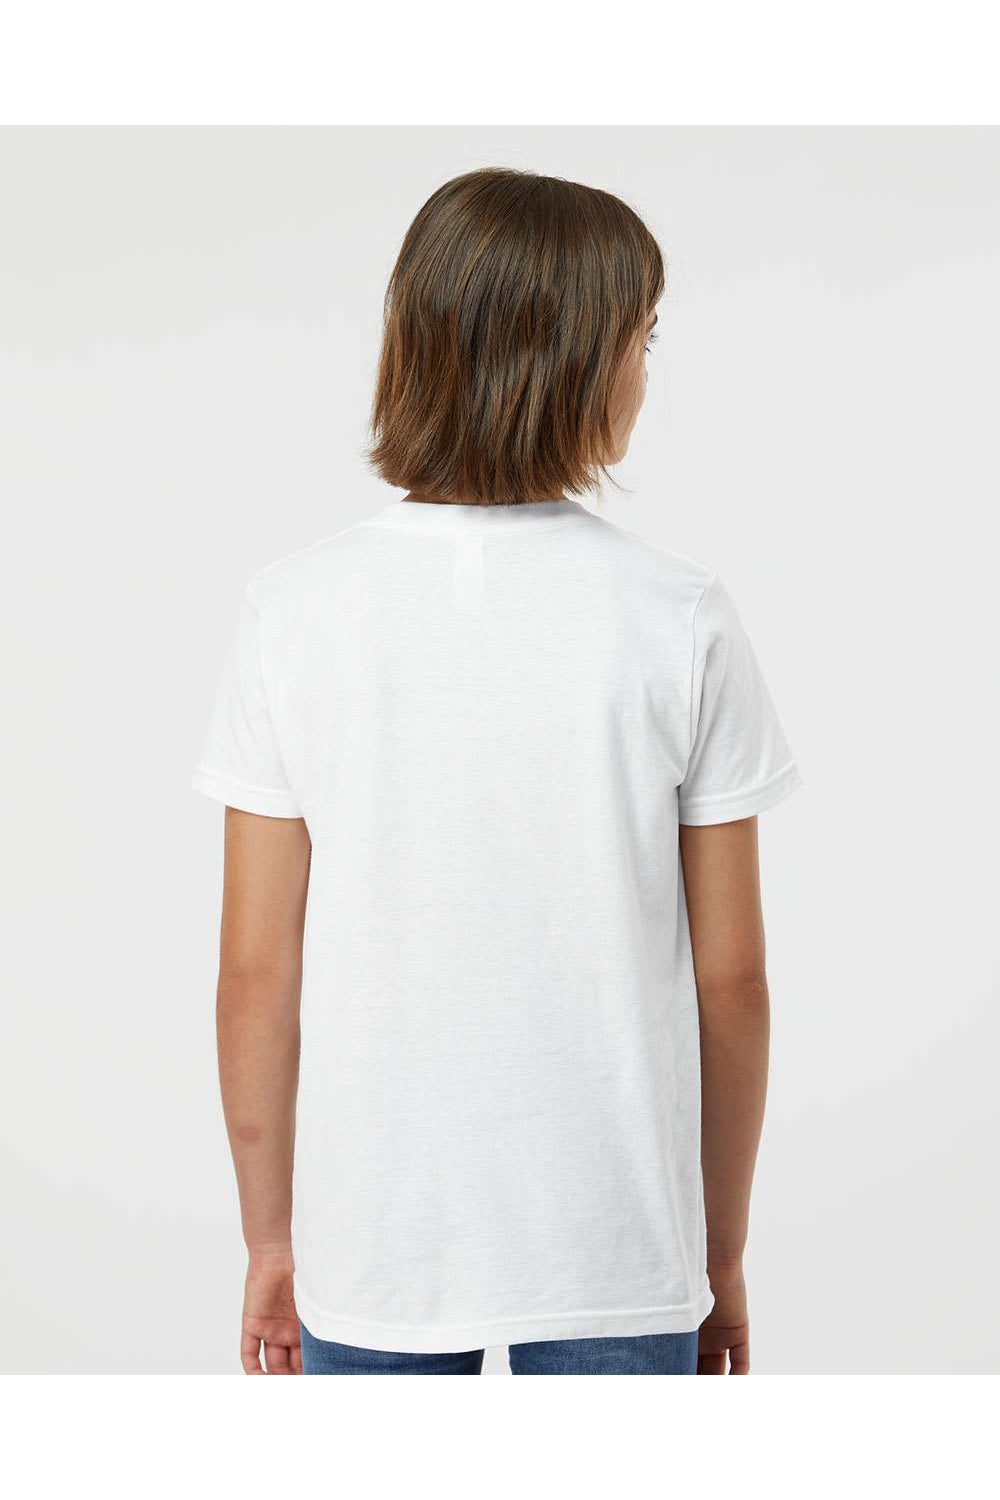 Tultex 235 Youth Fine Jersey Short Sleeve Crewneck T-Shirt White Model Back